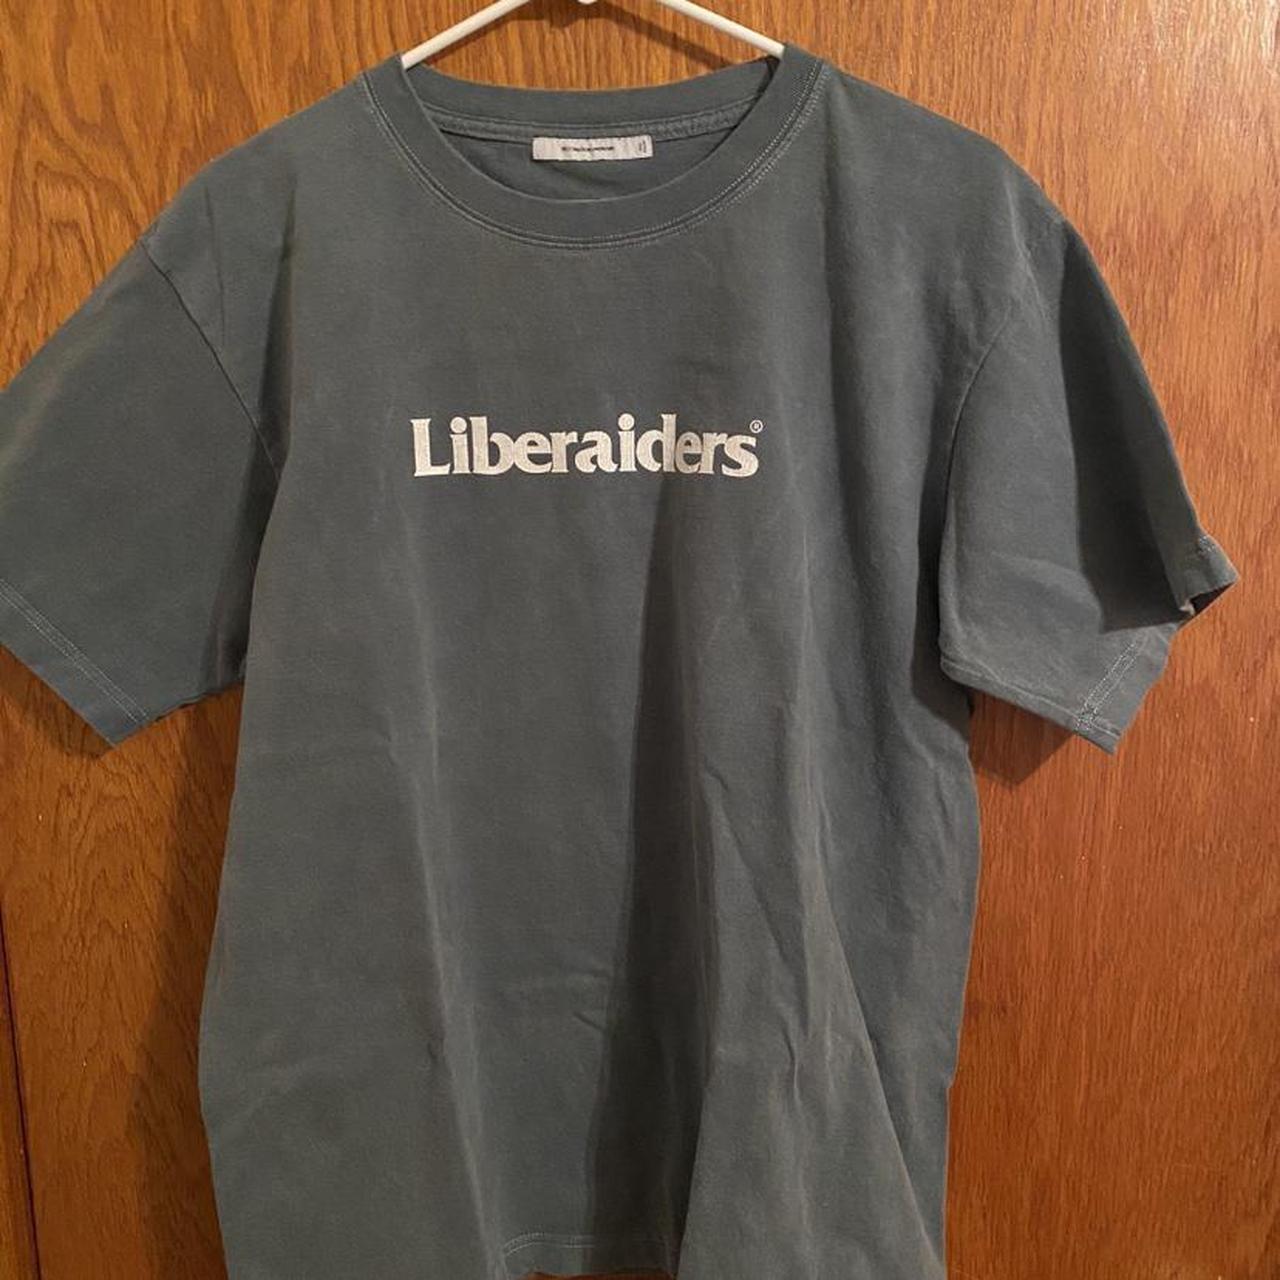 Product Image 1 - Liberaiders Overdyed heavyweight logo shirt
Size